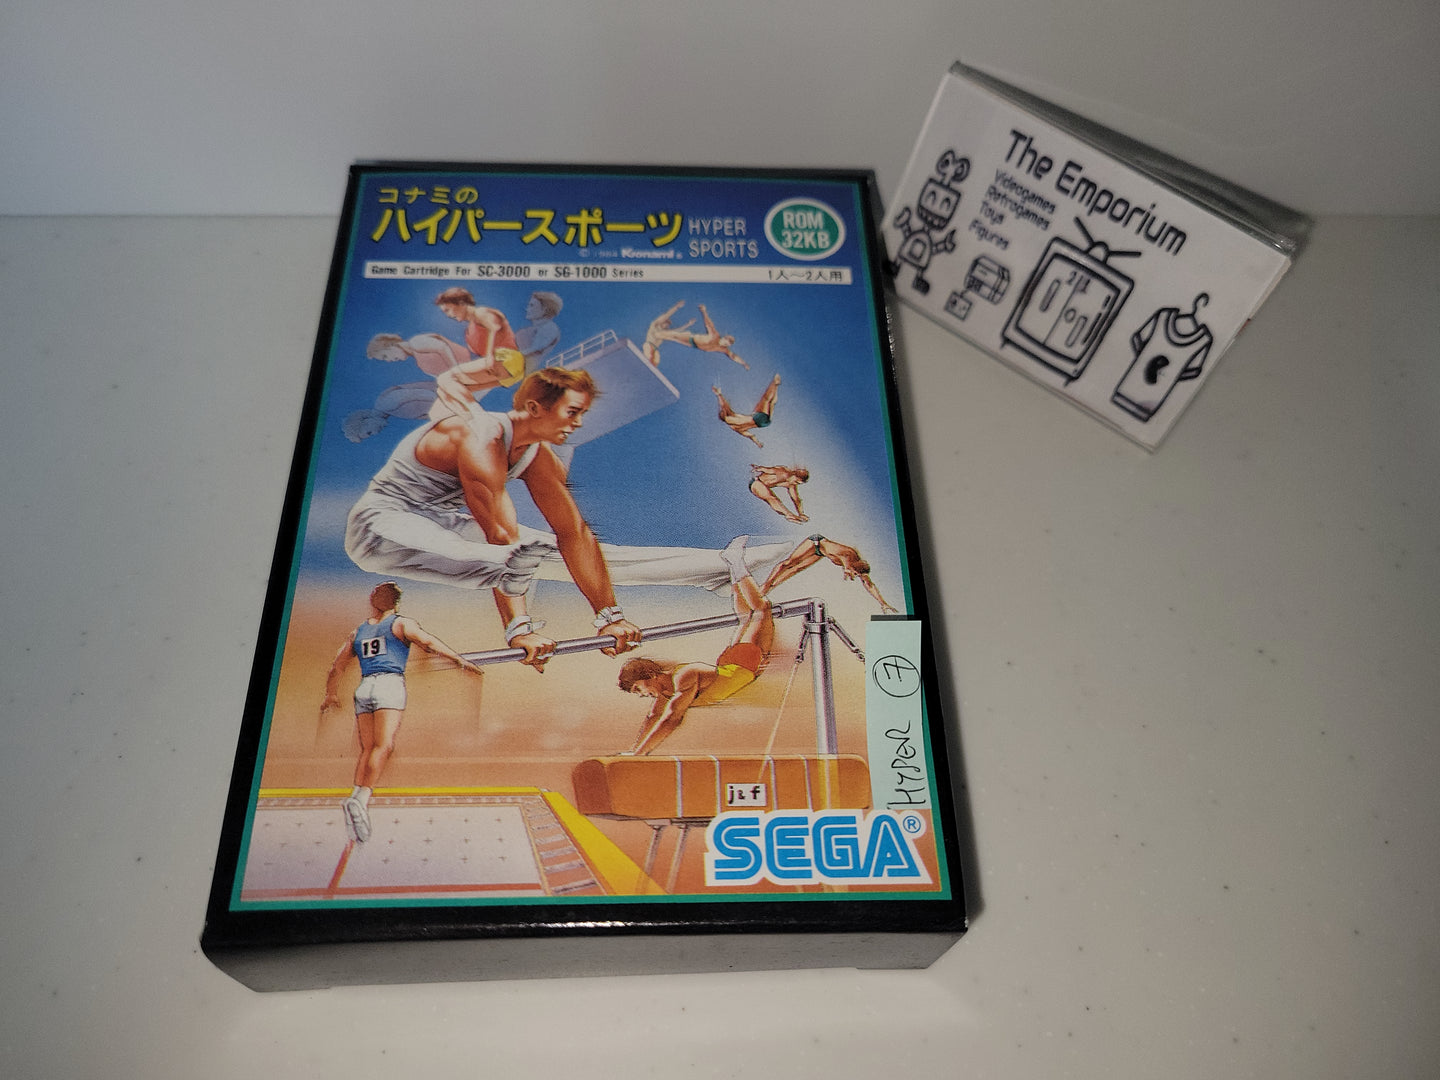 Hyper Sports - Sega mark sg1000